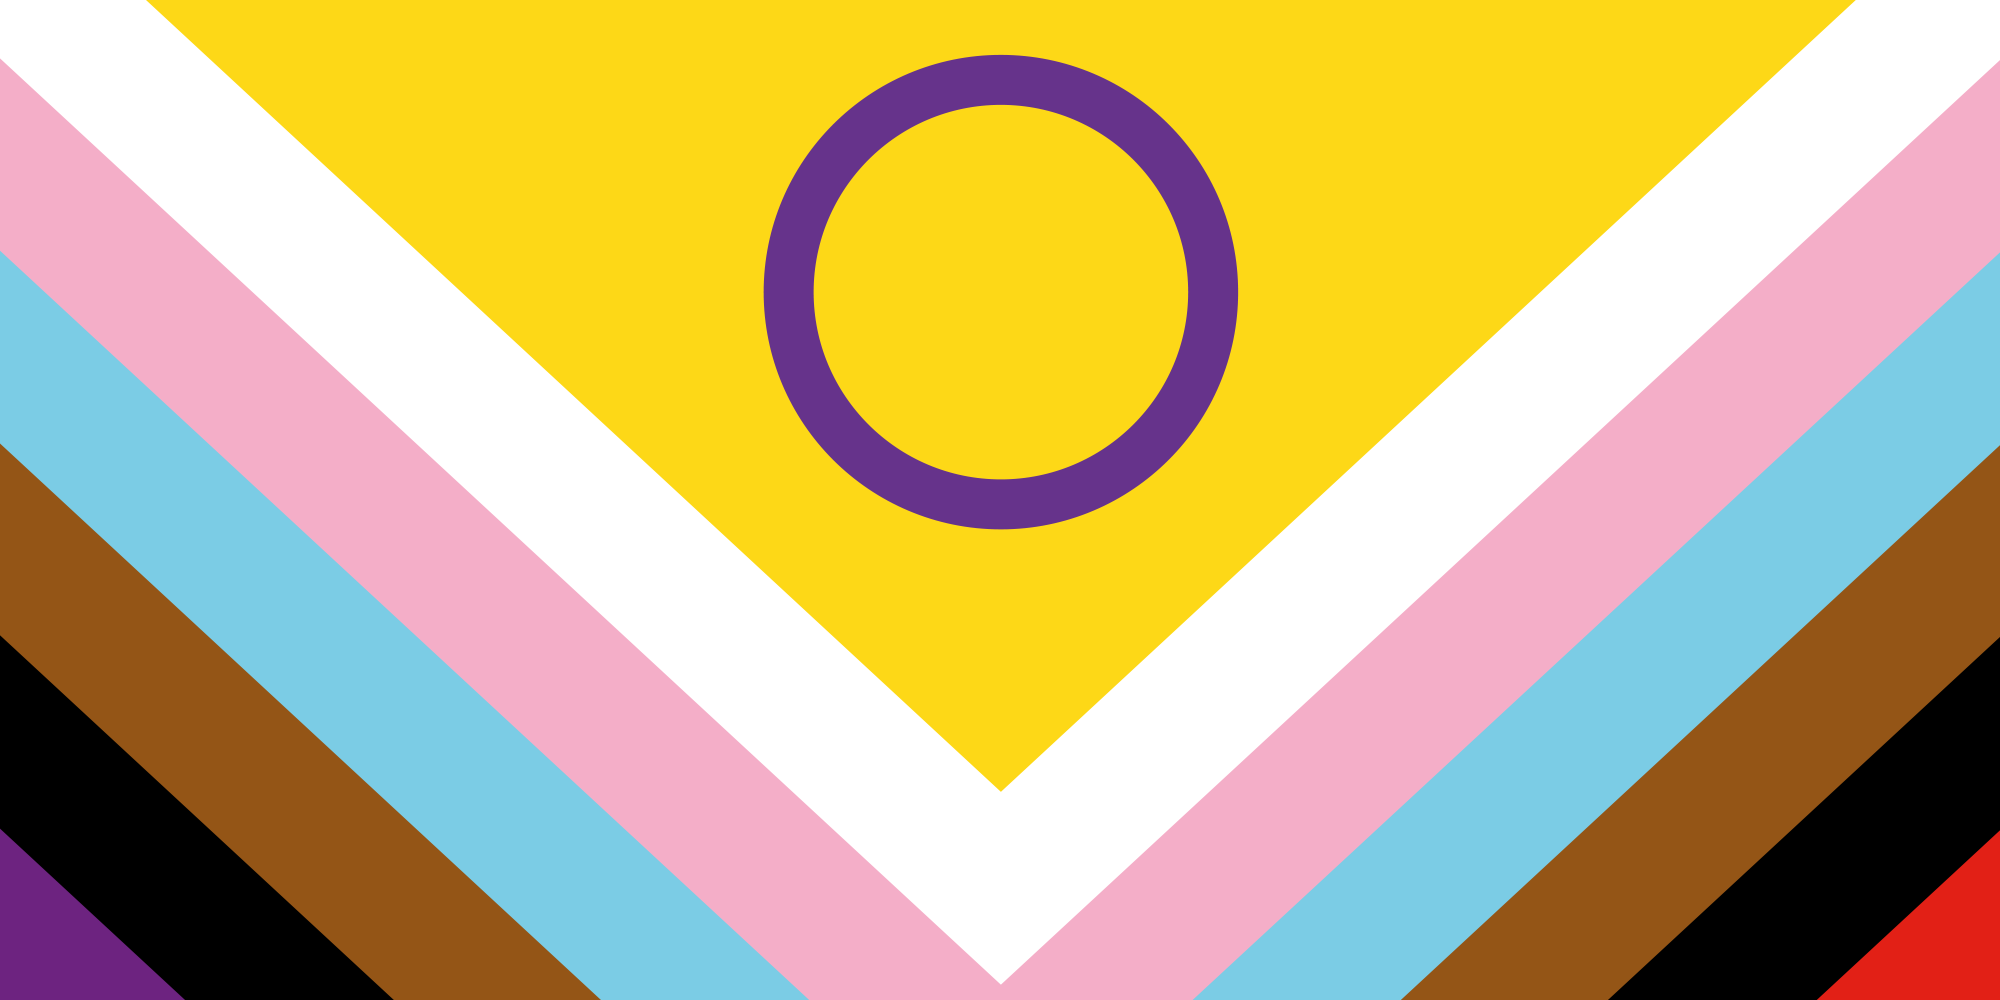 PROGRESS INITIATIVE  Home of the Progress Pride Flag – quasar